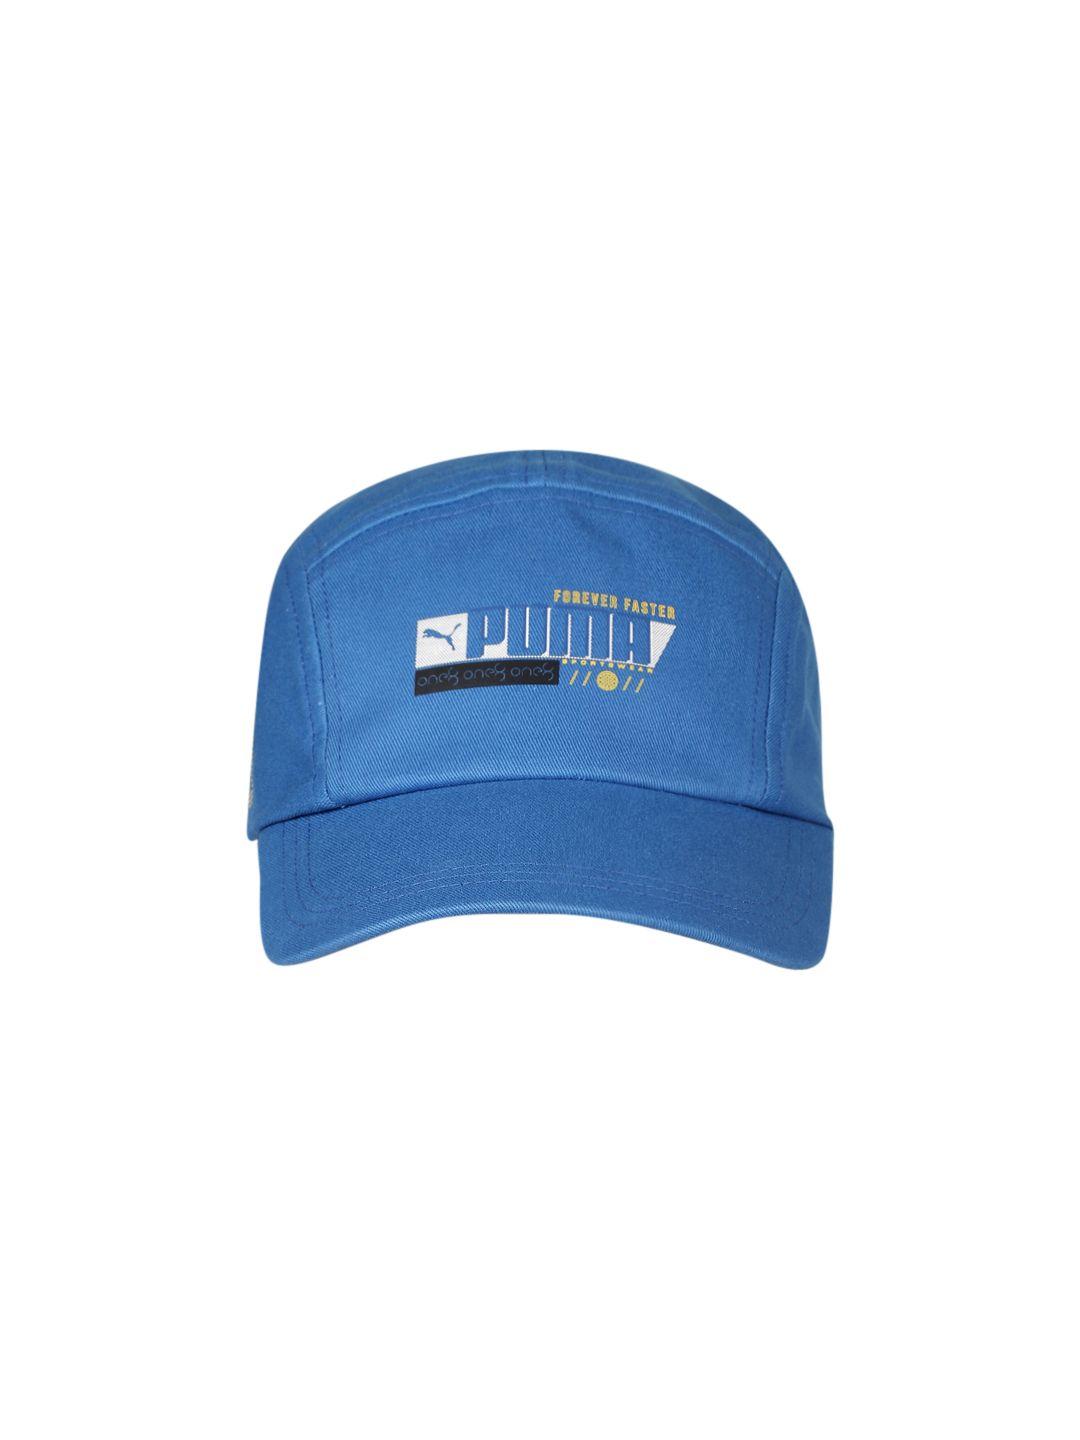 one8 x puma unisex graphic 5 panel brand logo printed pure cotton baseball cap